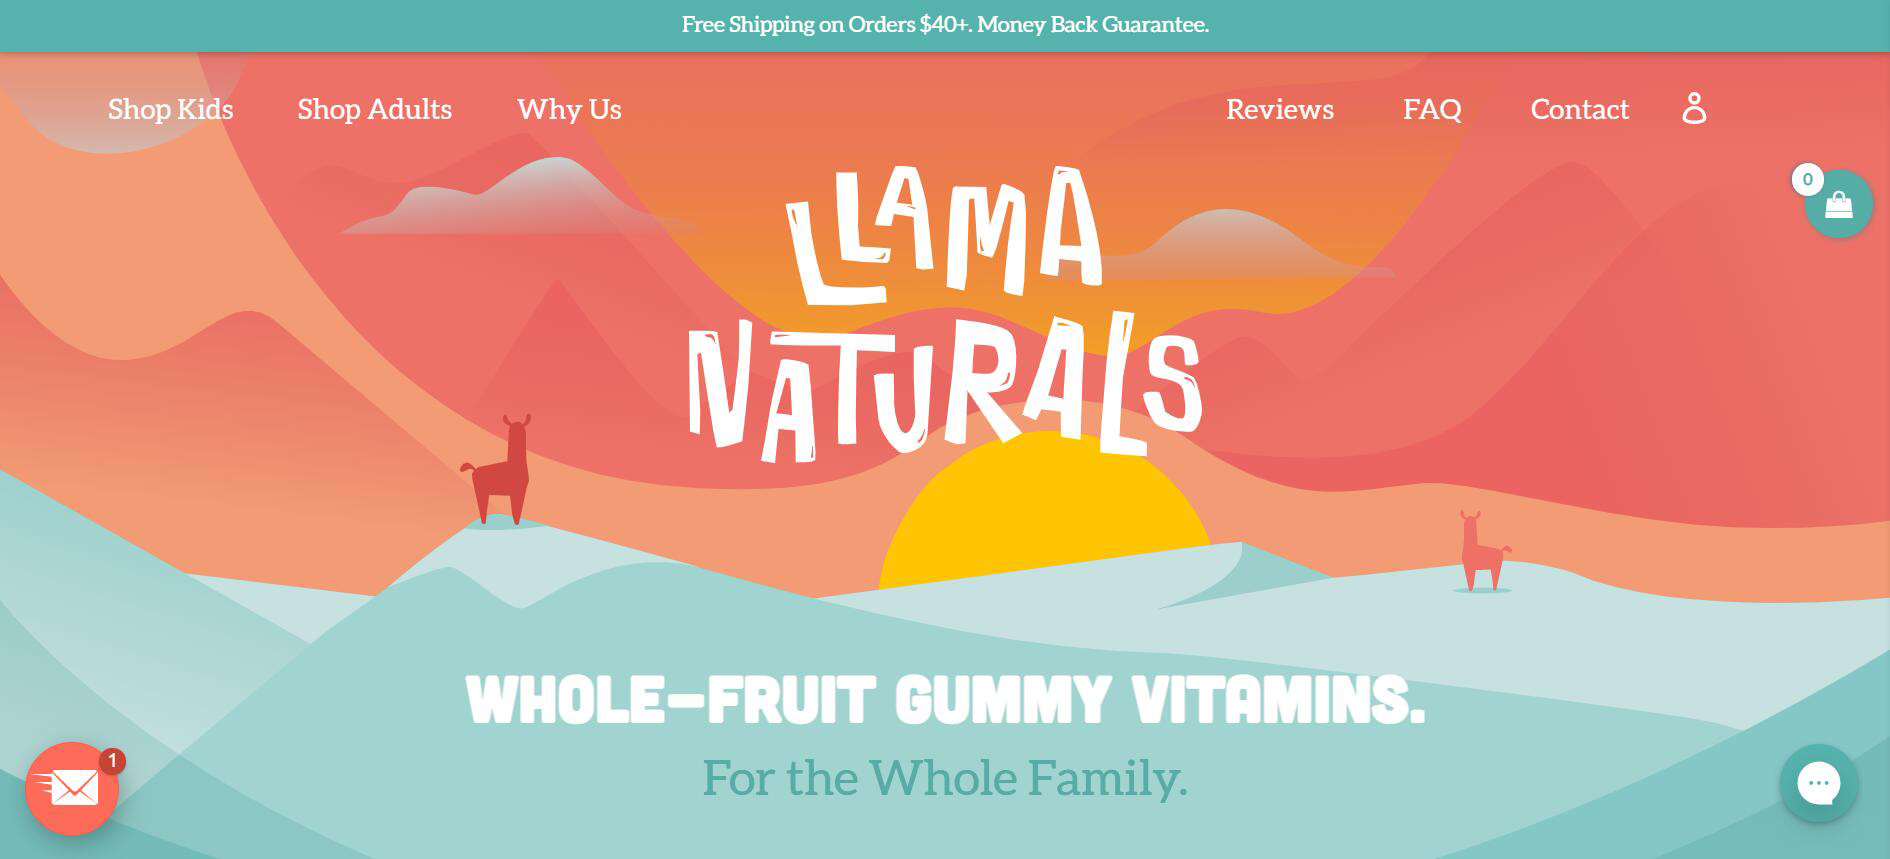 New offer launched: Llama Naturals Affiliate Program - AffJumbo